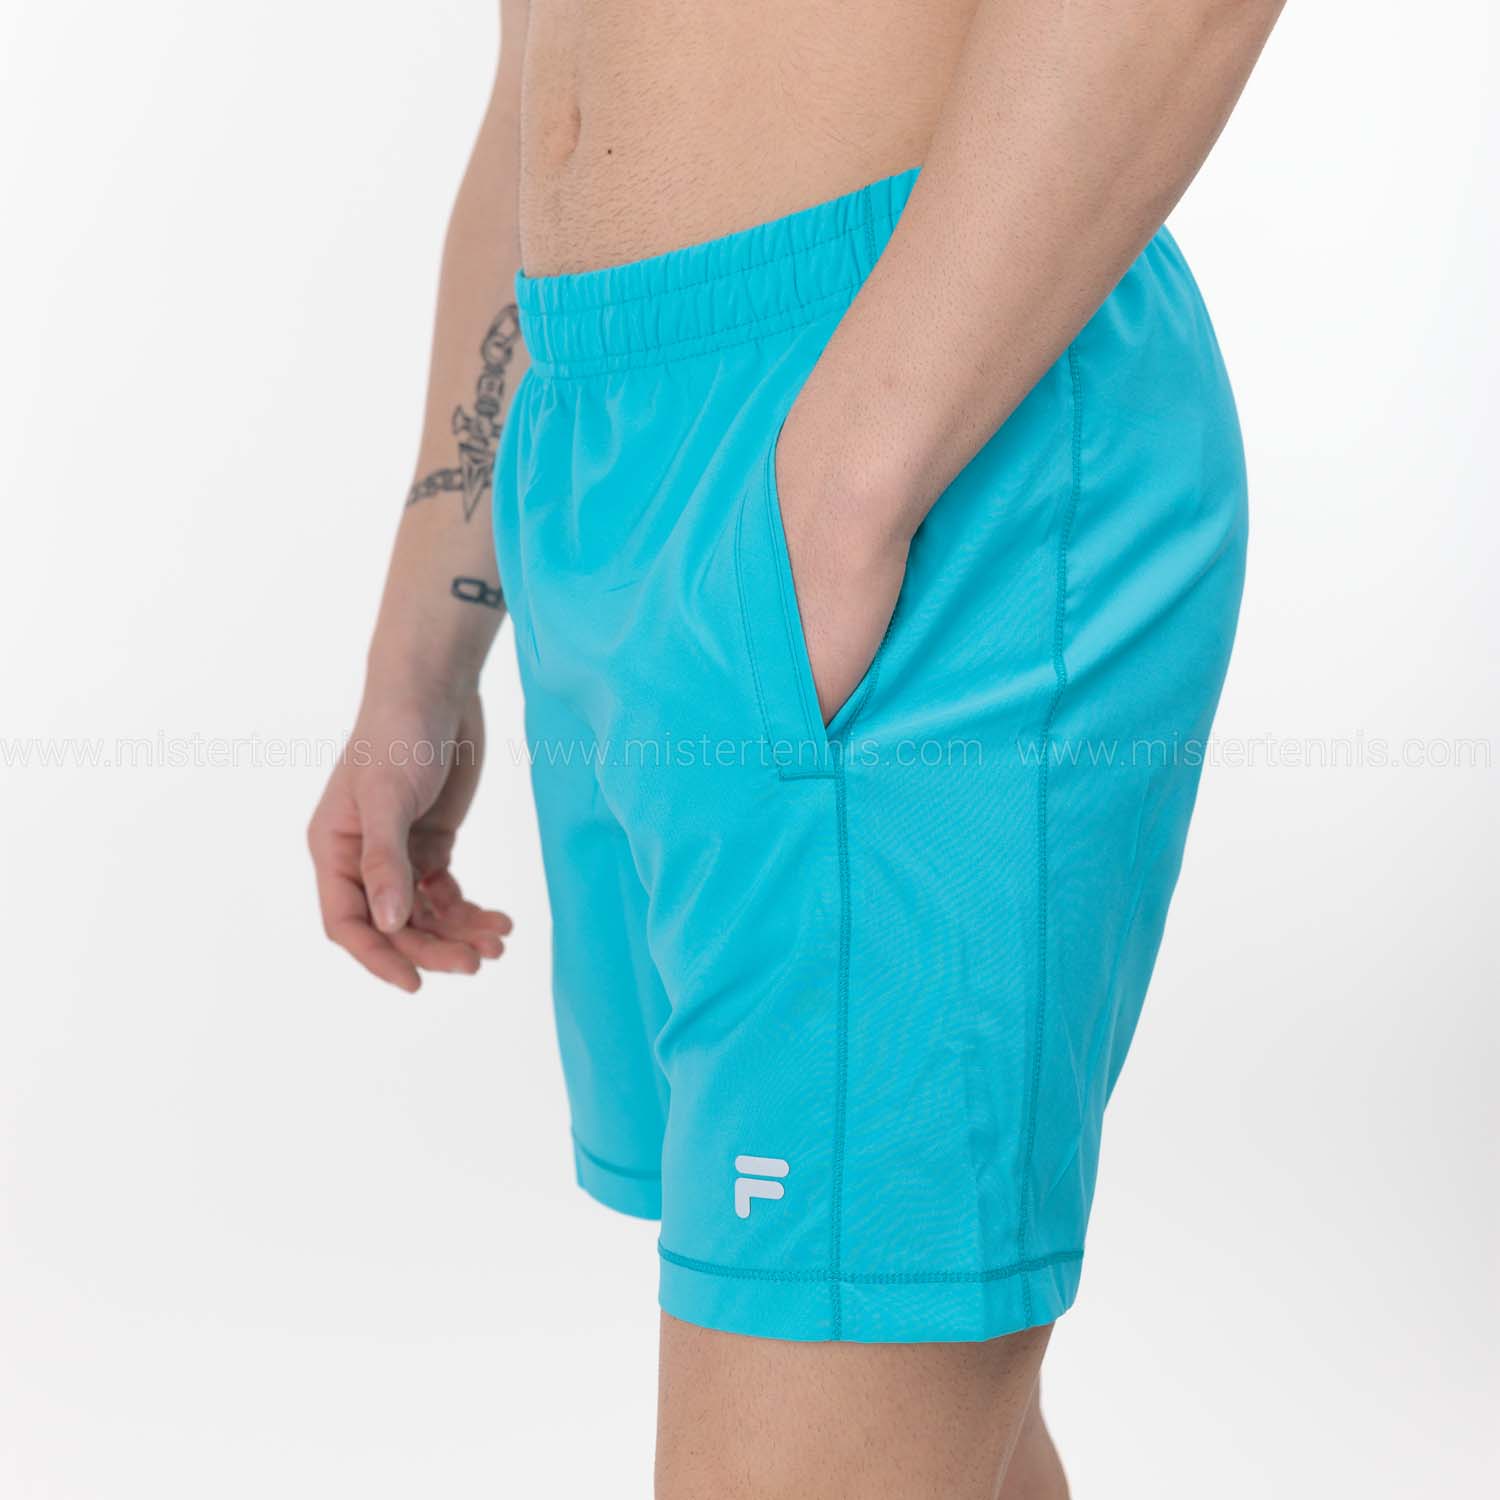 Fila Constantin 7in Shorts - Scuba Blue